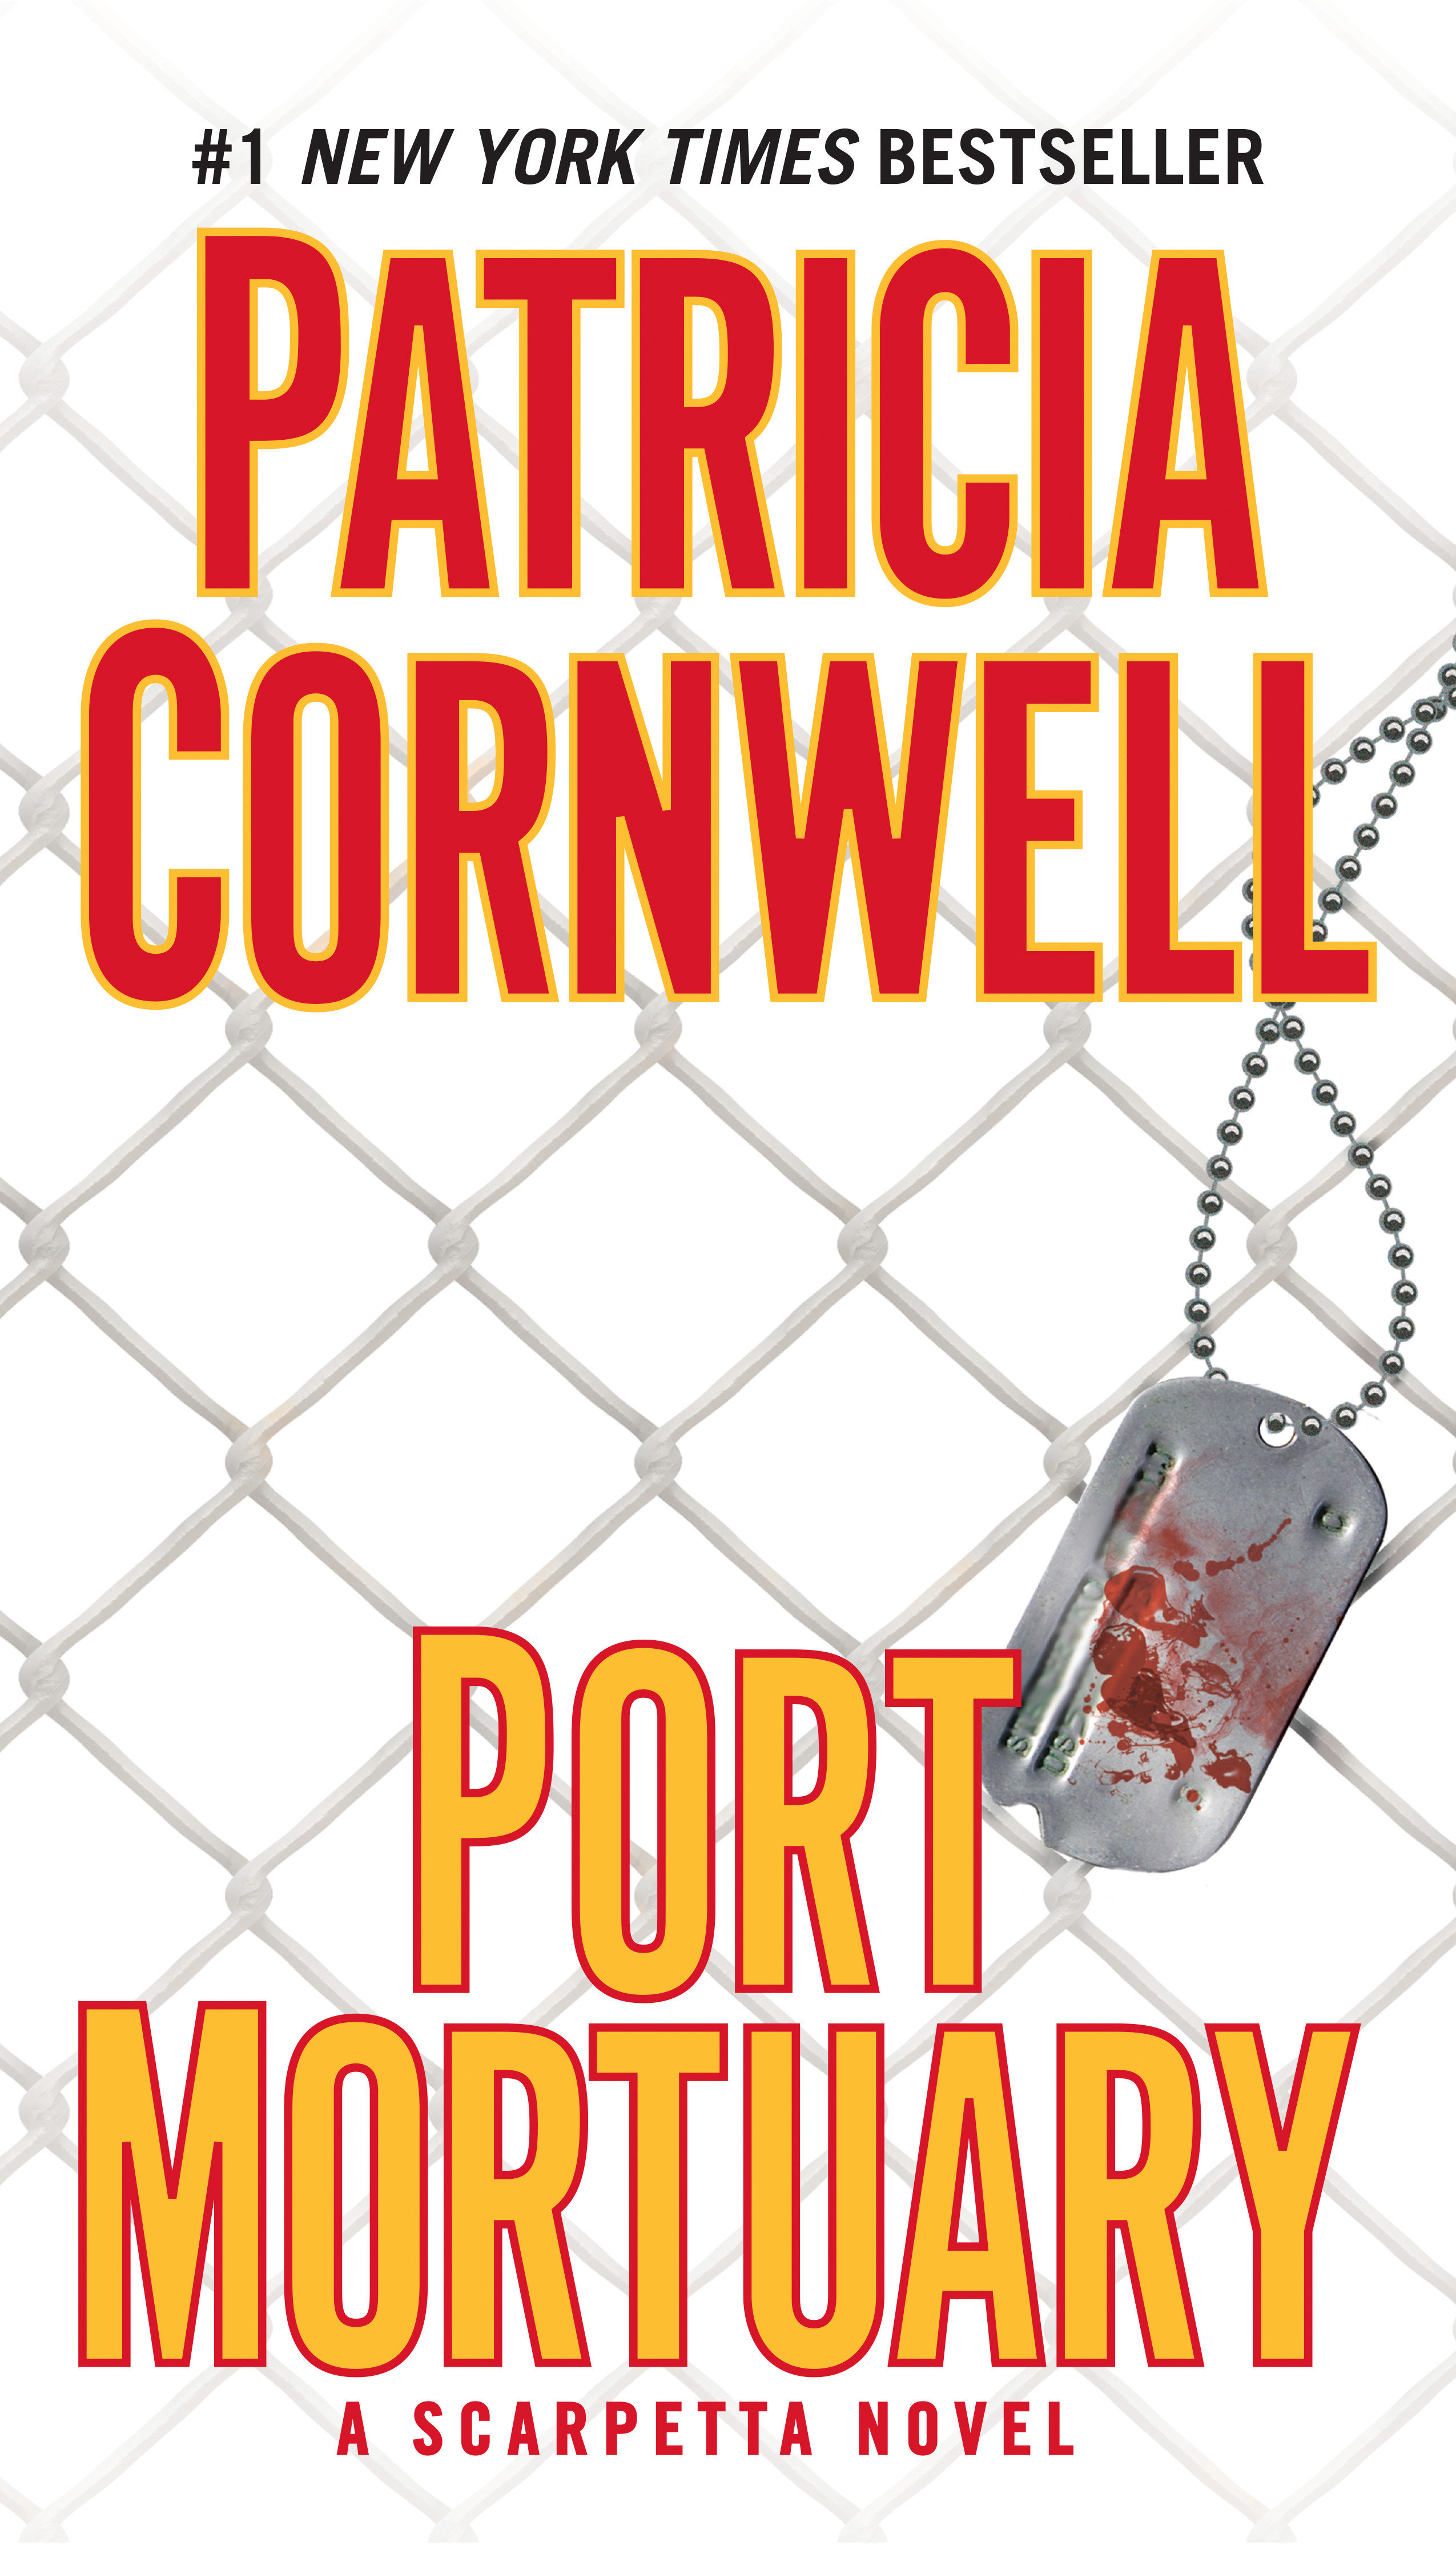 Port mortuary cover image